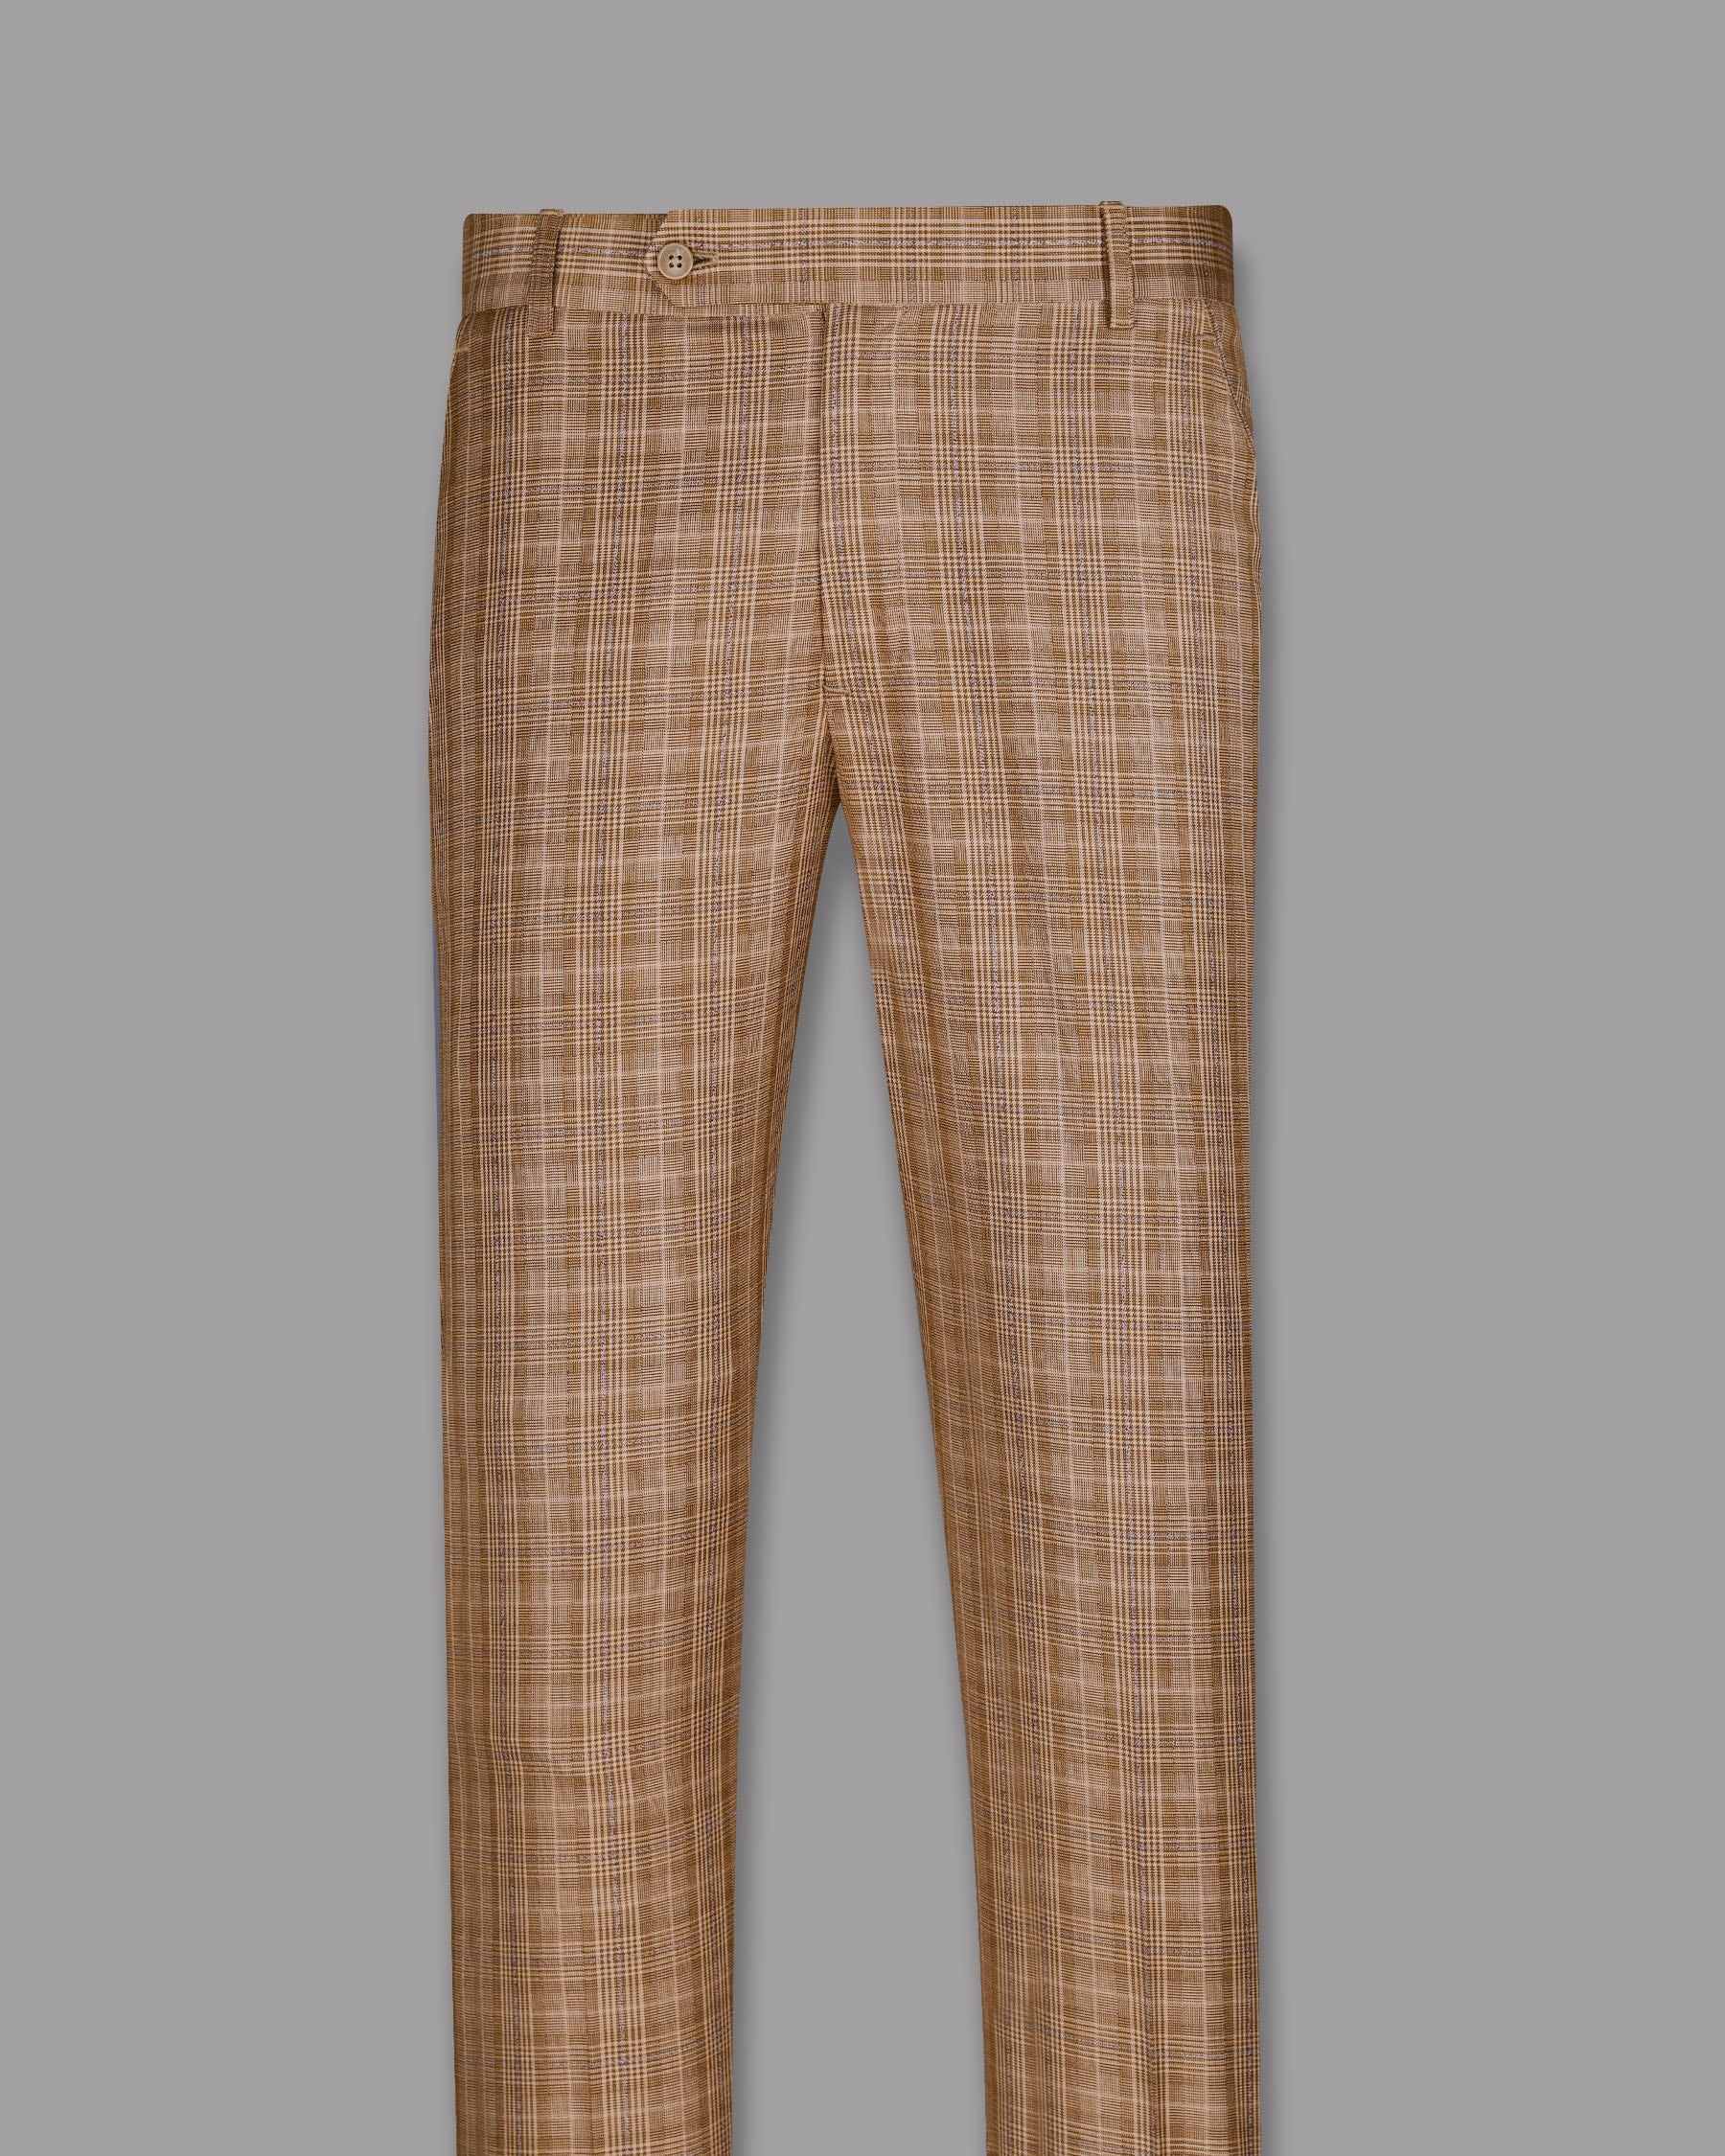 Camel Plaid Cross Placket Bandhgala/Mandarin Suit